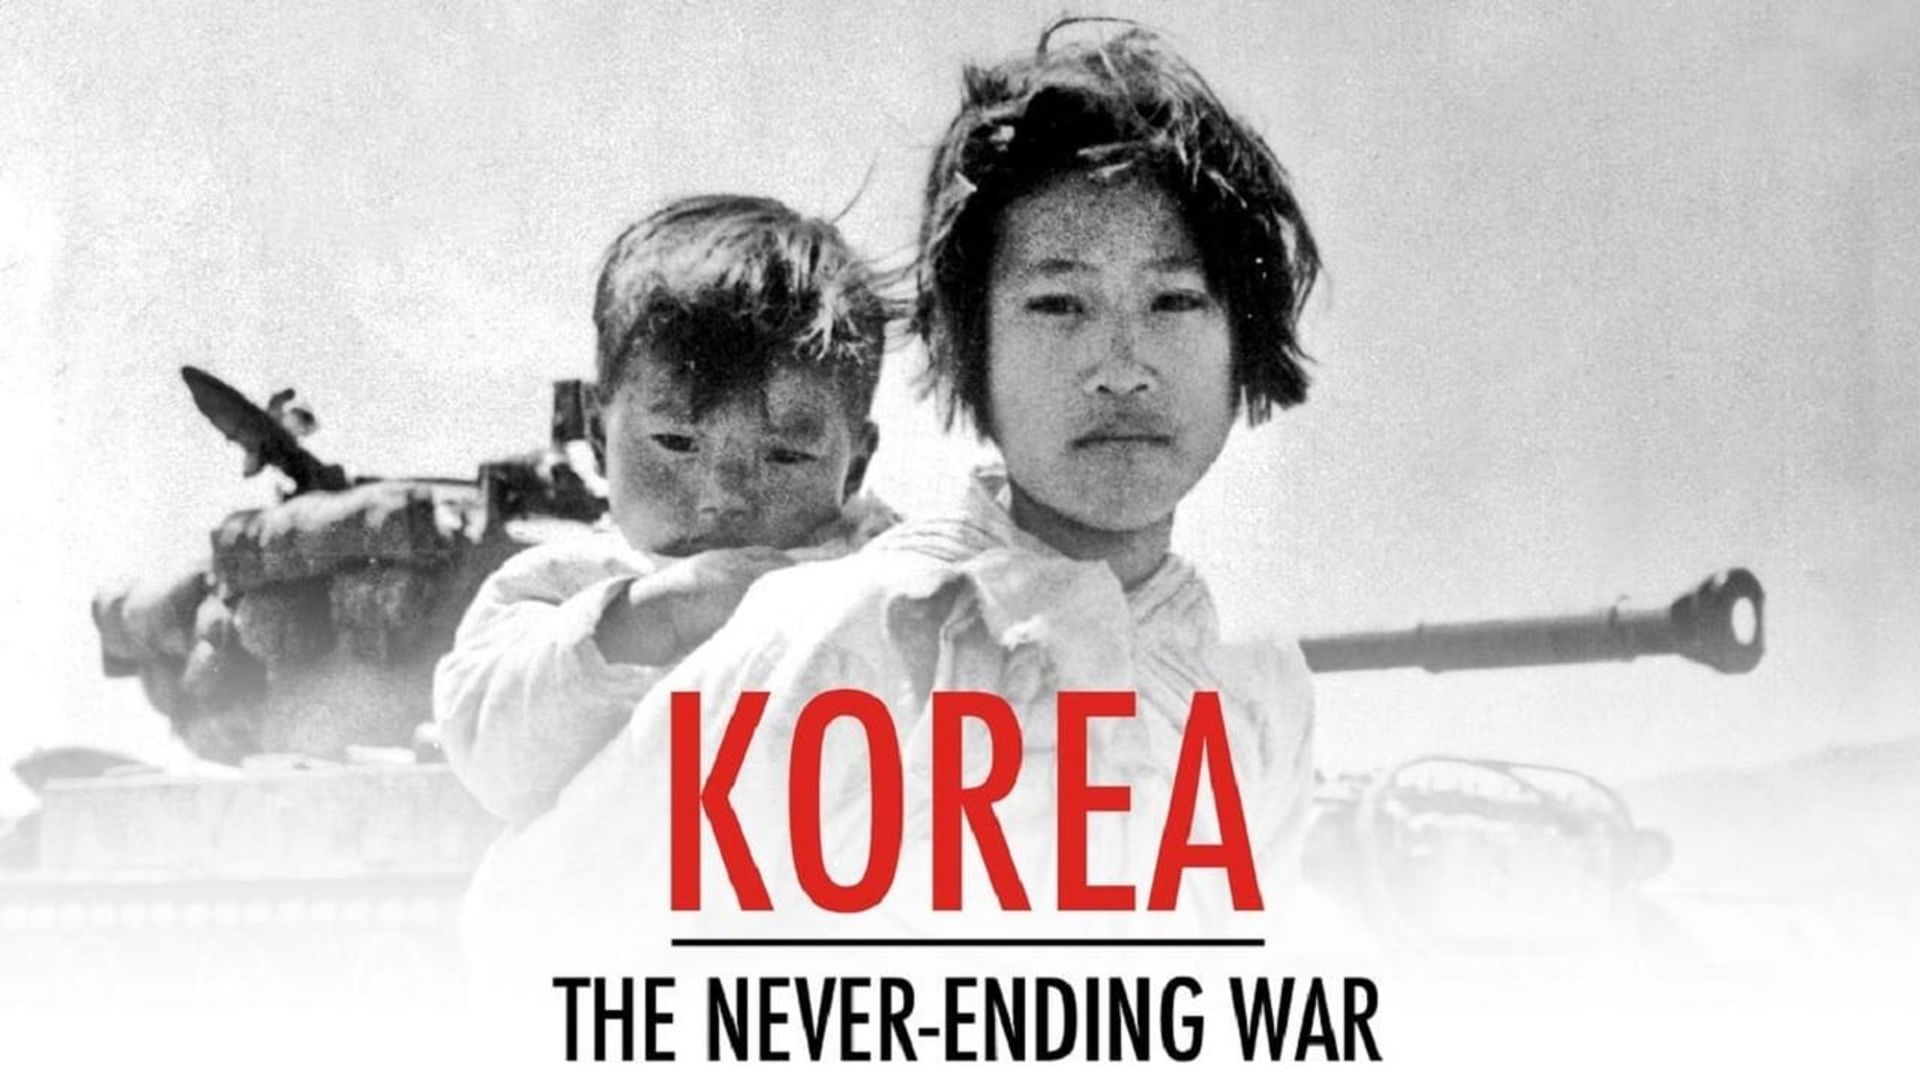 Korea: The Never-Ending War background